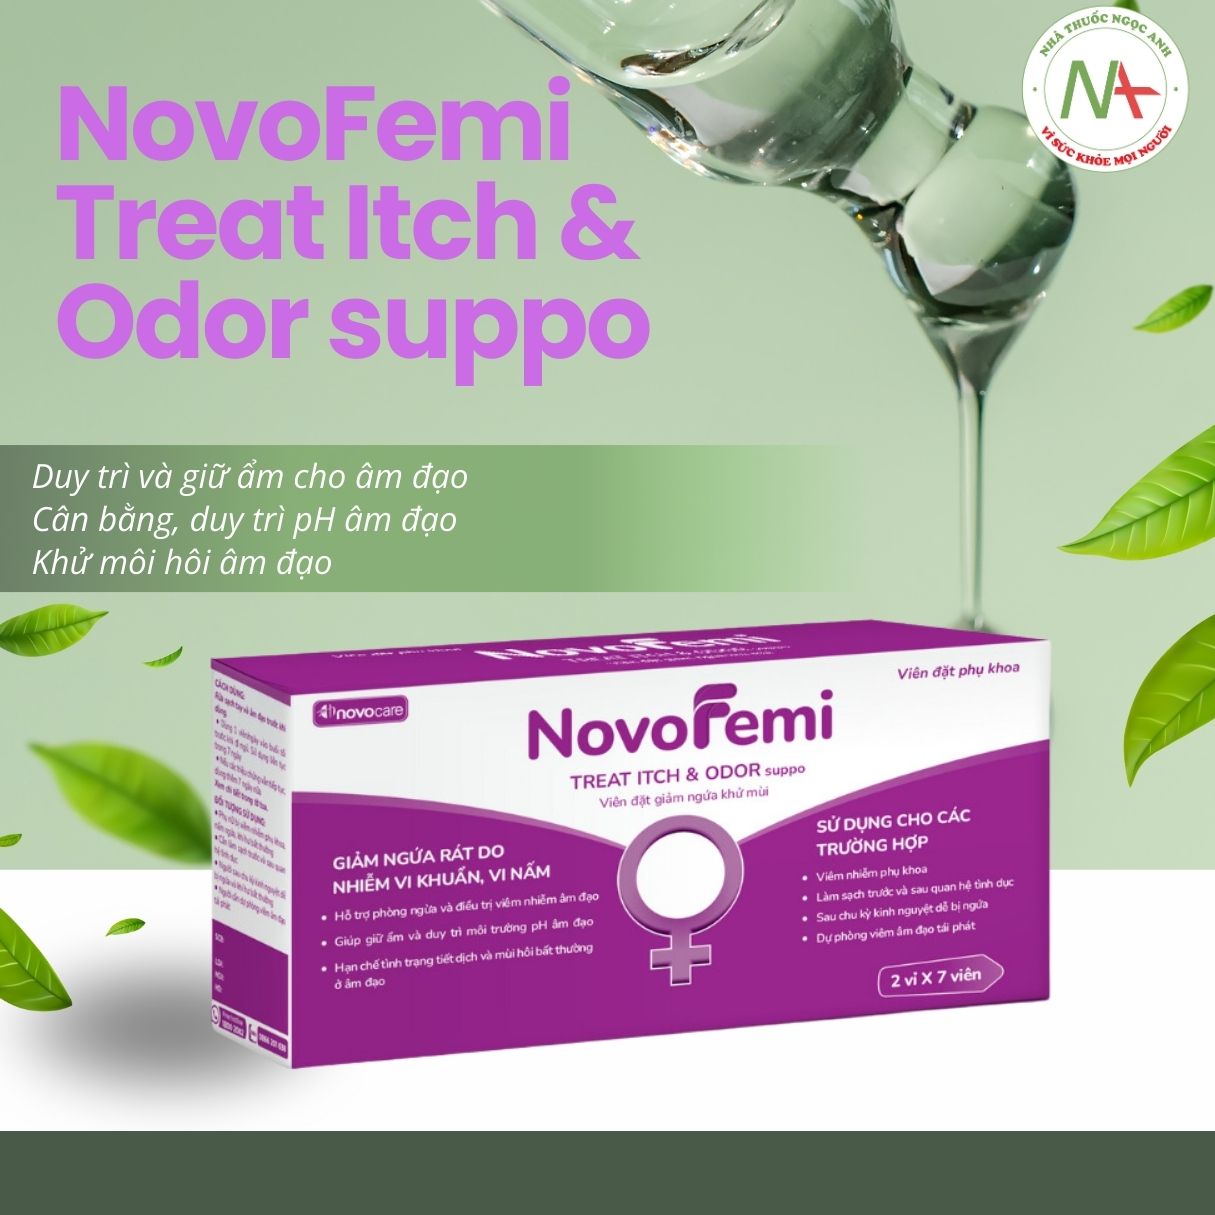 NovoFemi Treat Itch & Odor suppo